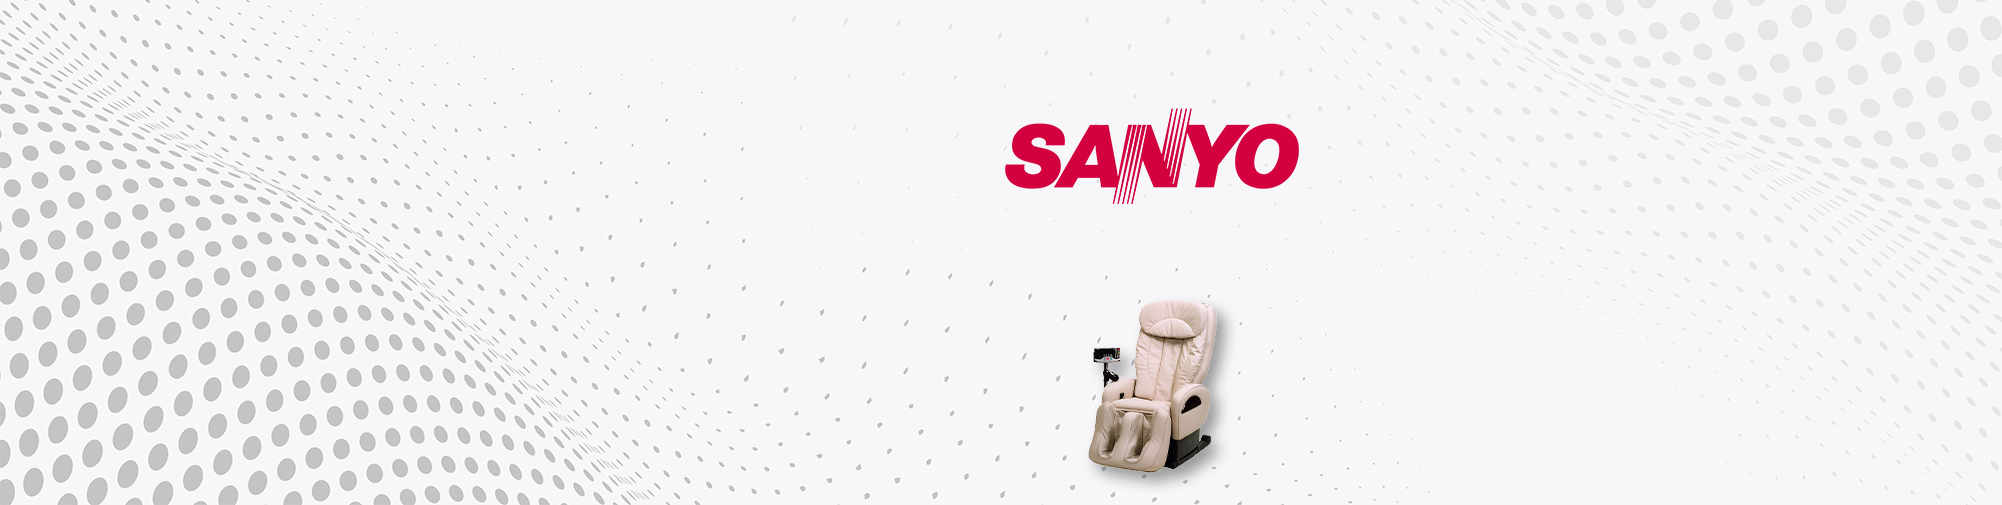 SANYO - японская компания-бренд | Massage Chair World